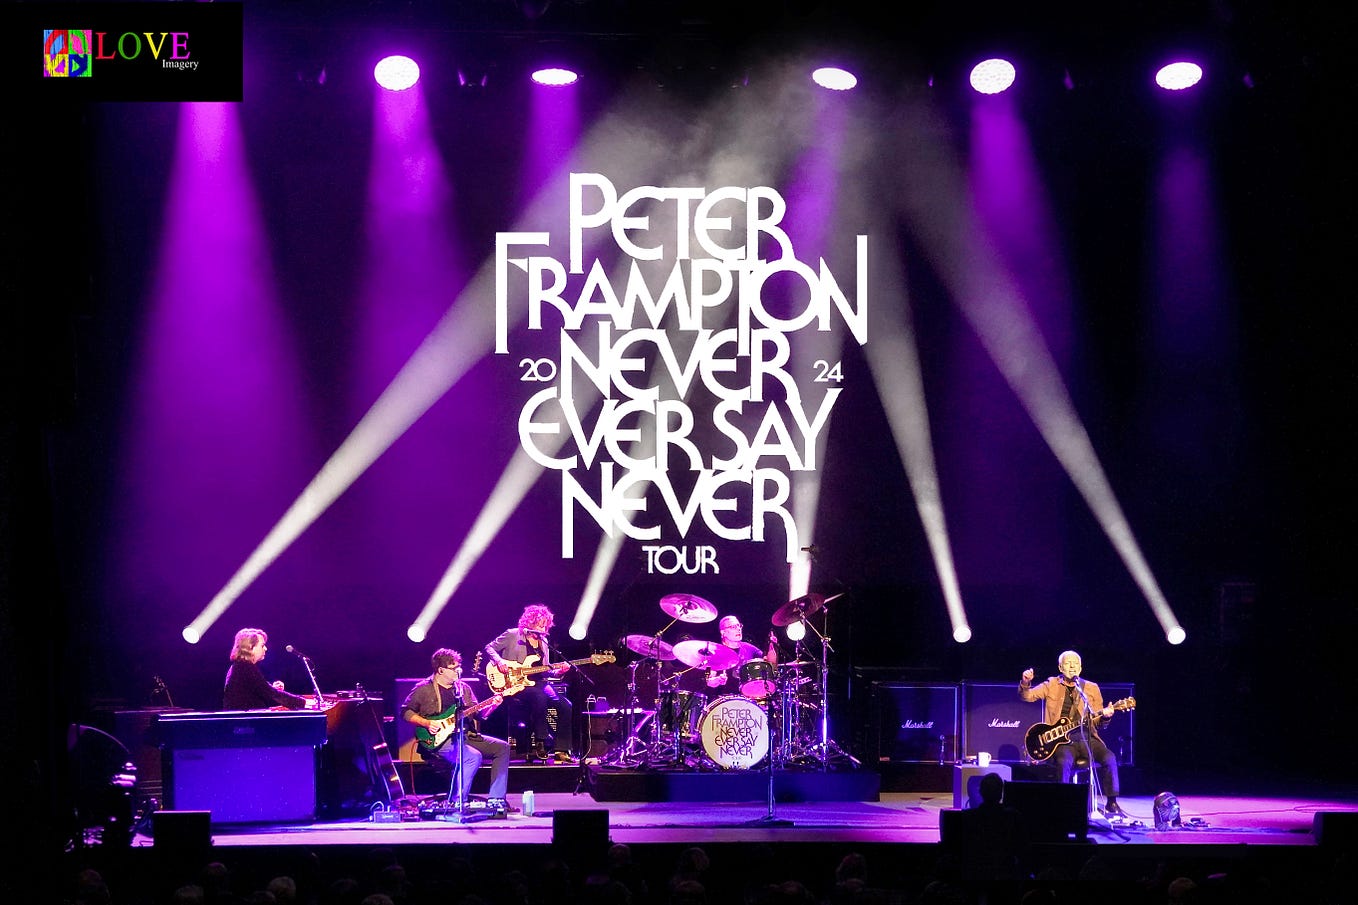 Peter Frampton’s “Never Ever Say Never Tour” LIVE! at MPAC